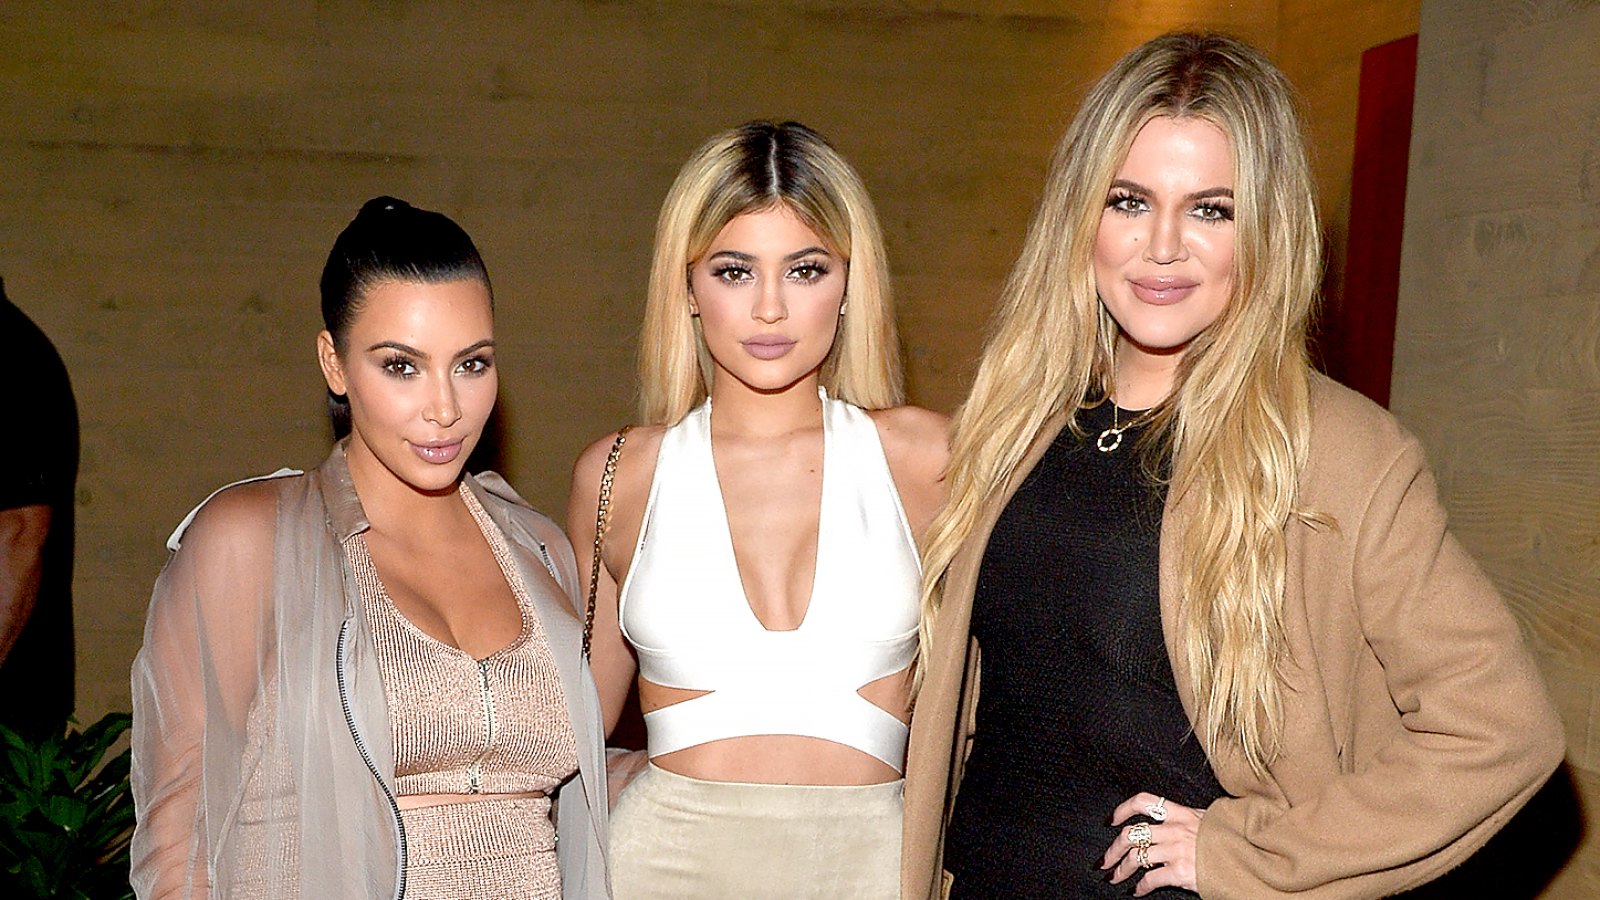 Kim Kardashian West, Kylie Jenner, Khloe Kardashian host a dinner and preview of their new apps launching soon at Nobu Malibu on September 1, 2015 in Malibu, California.